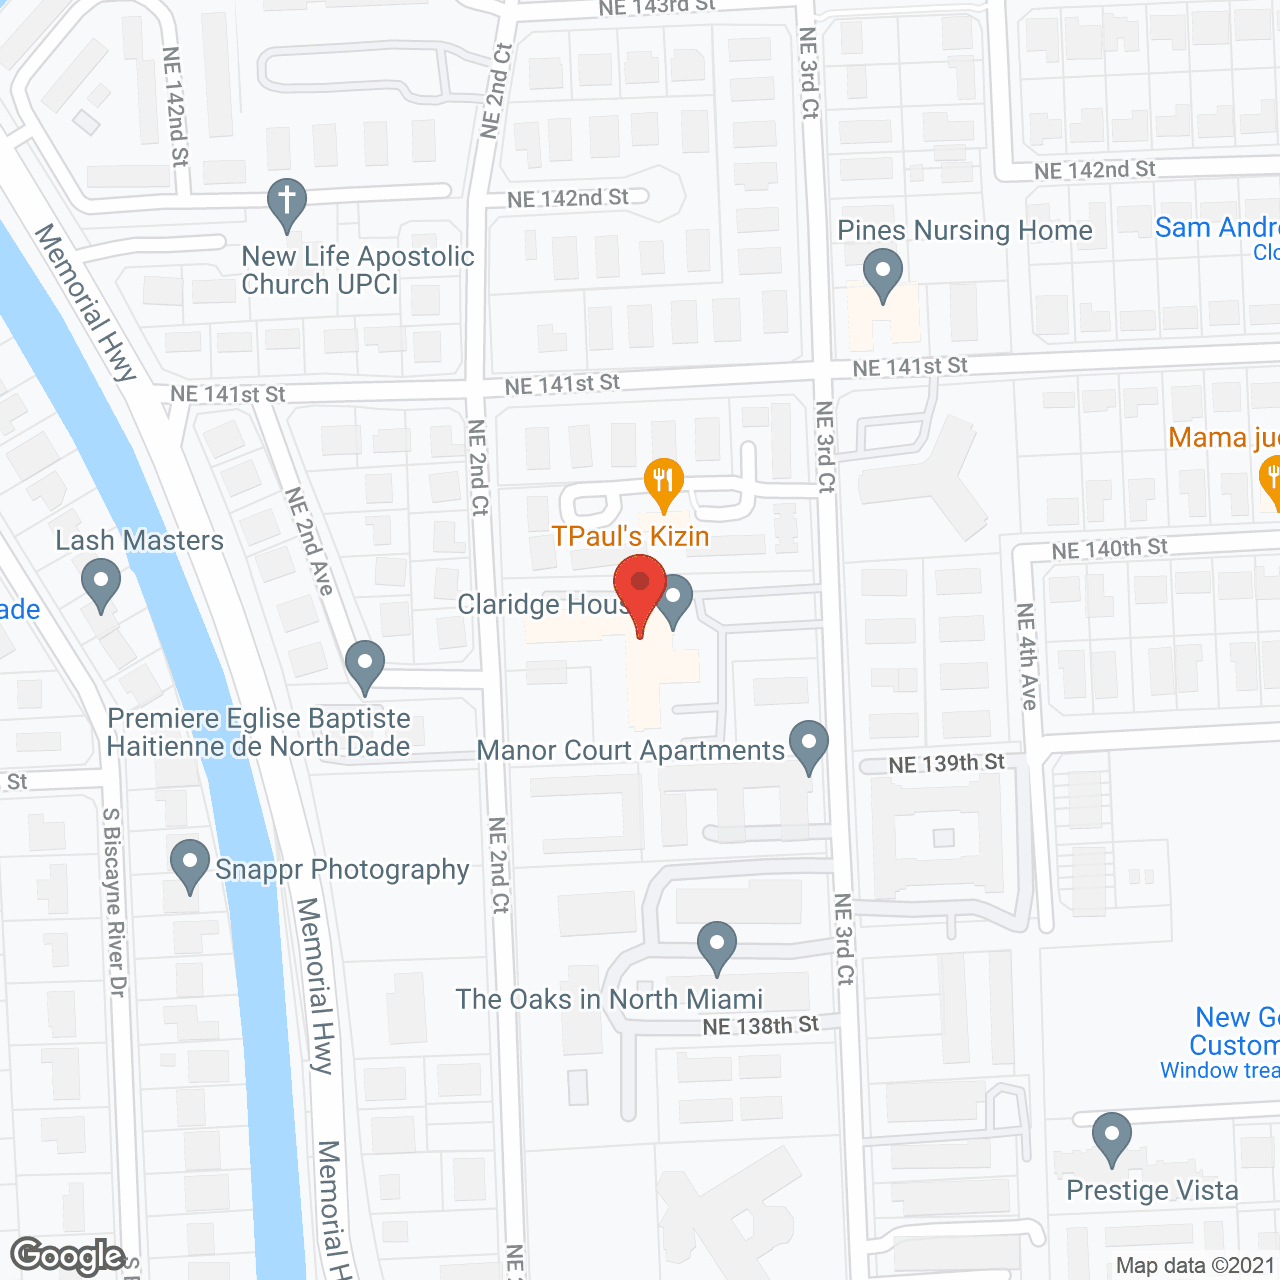 Claridge House in google map